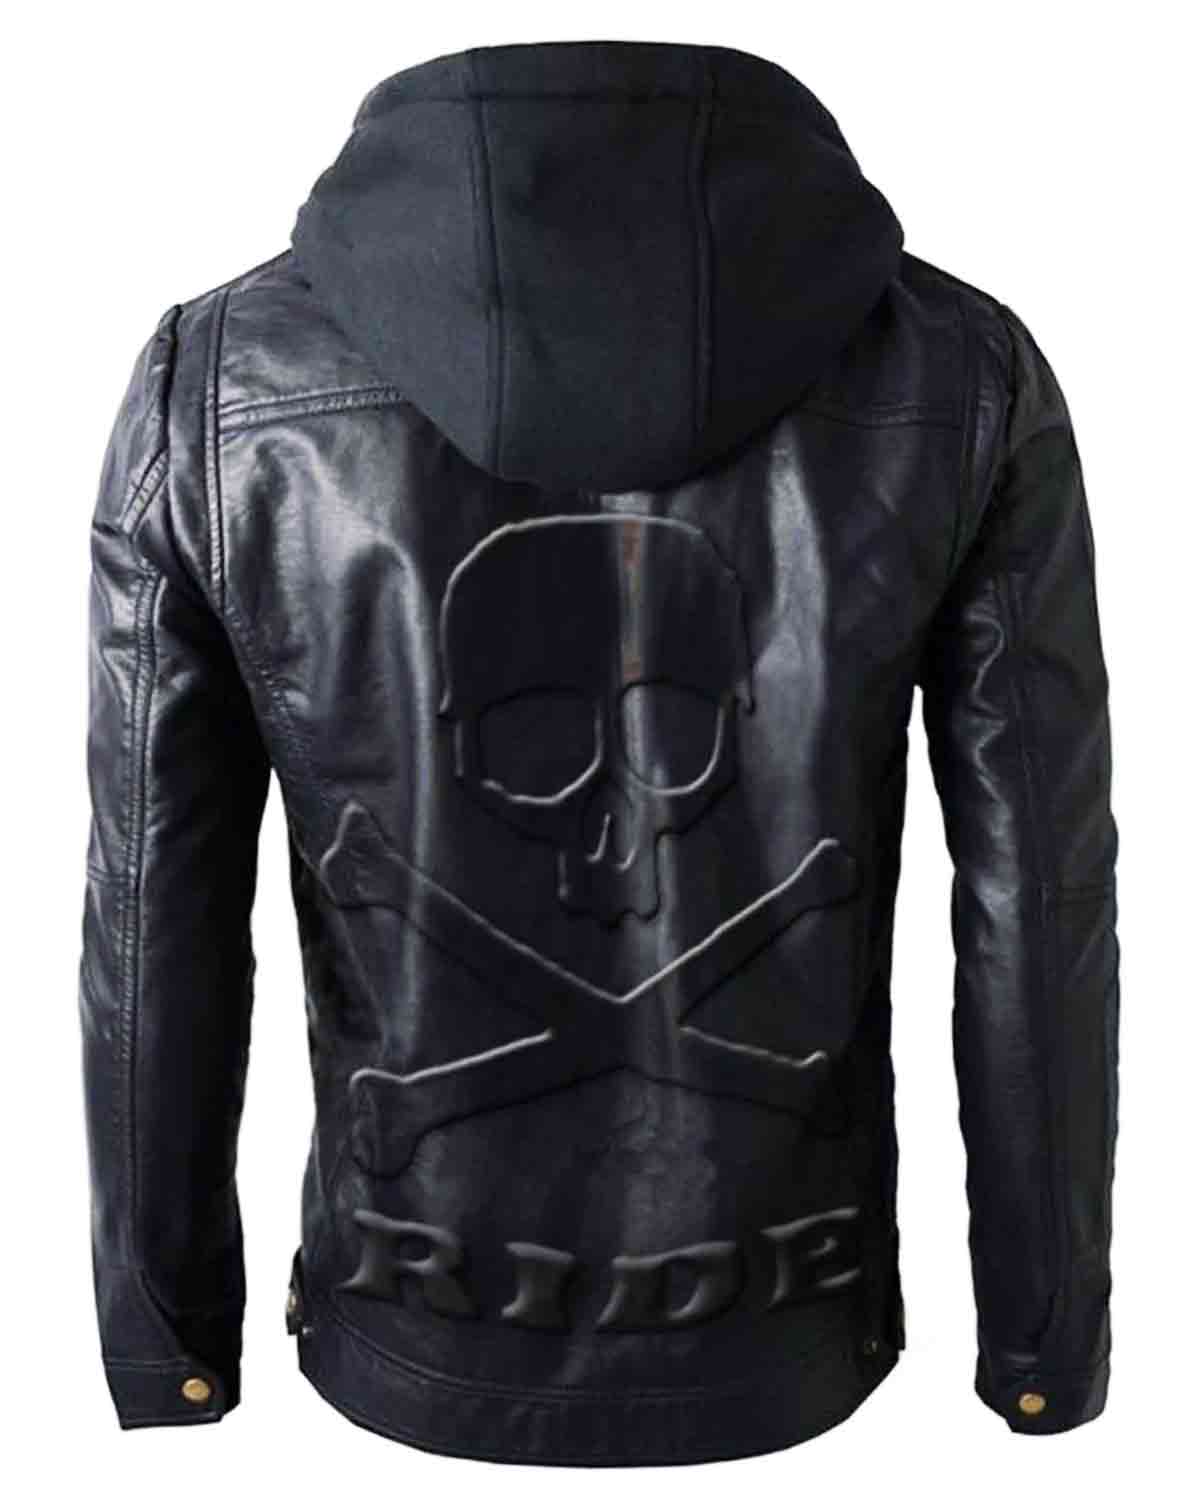 MotorCycleJackets Brando Style Motorbike Leather Jacket Hoodie with Skull Embossed Logo at Back